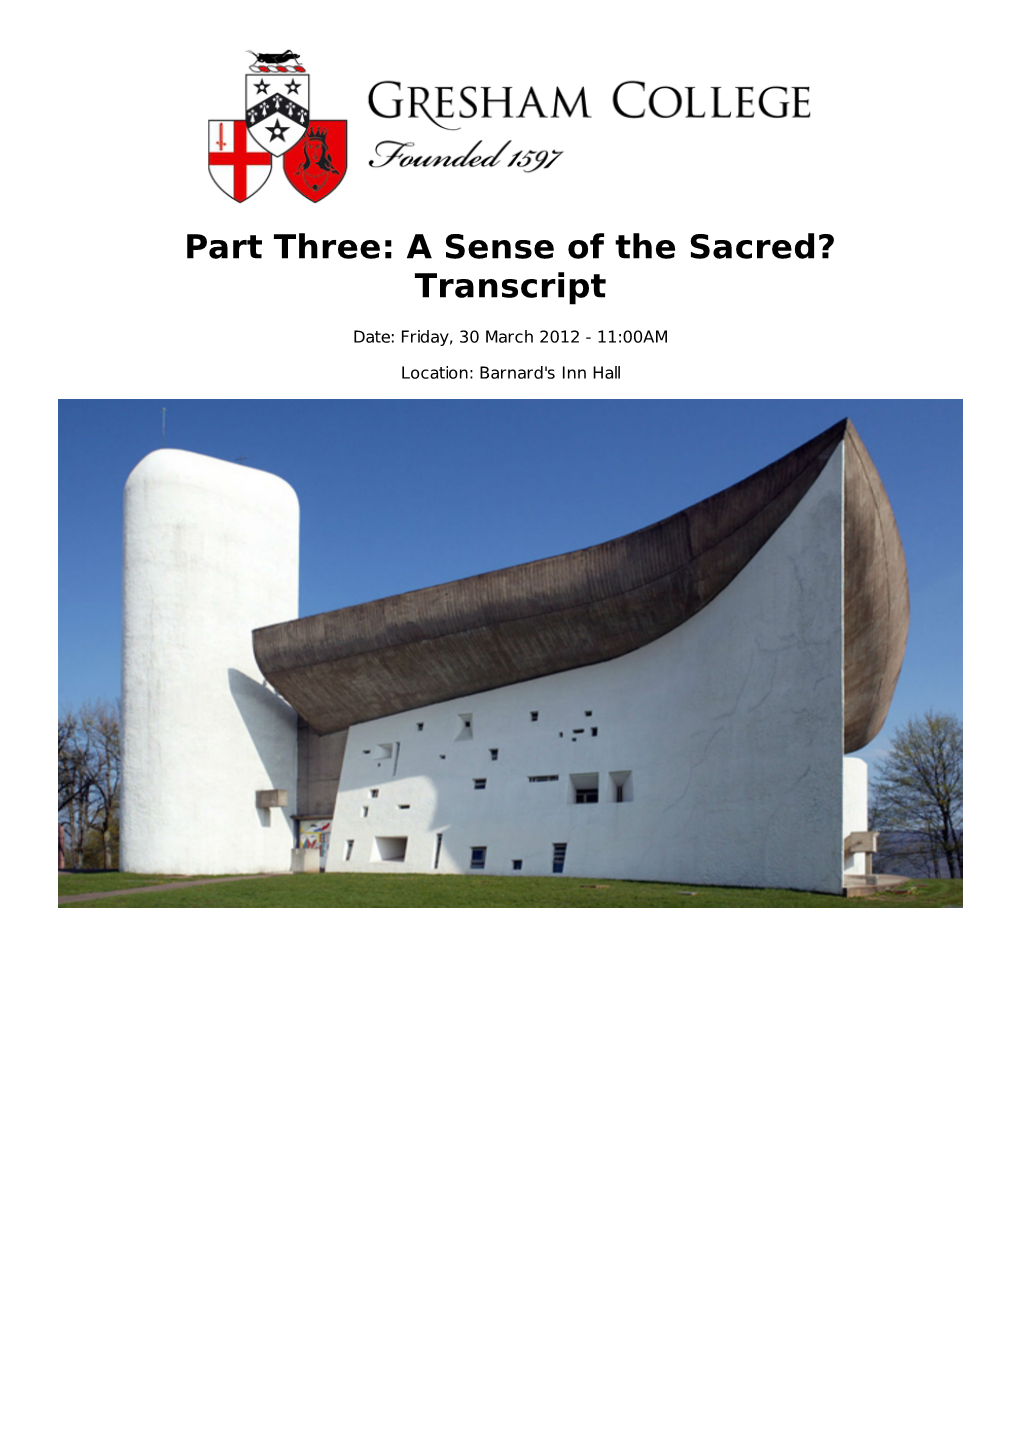 Part Three: a Sense of the Sacred? Transcript